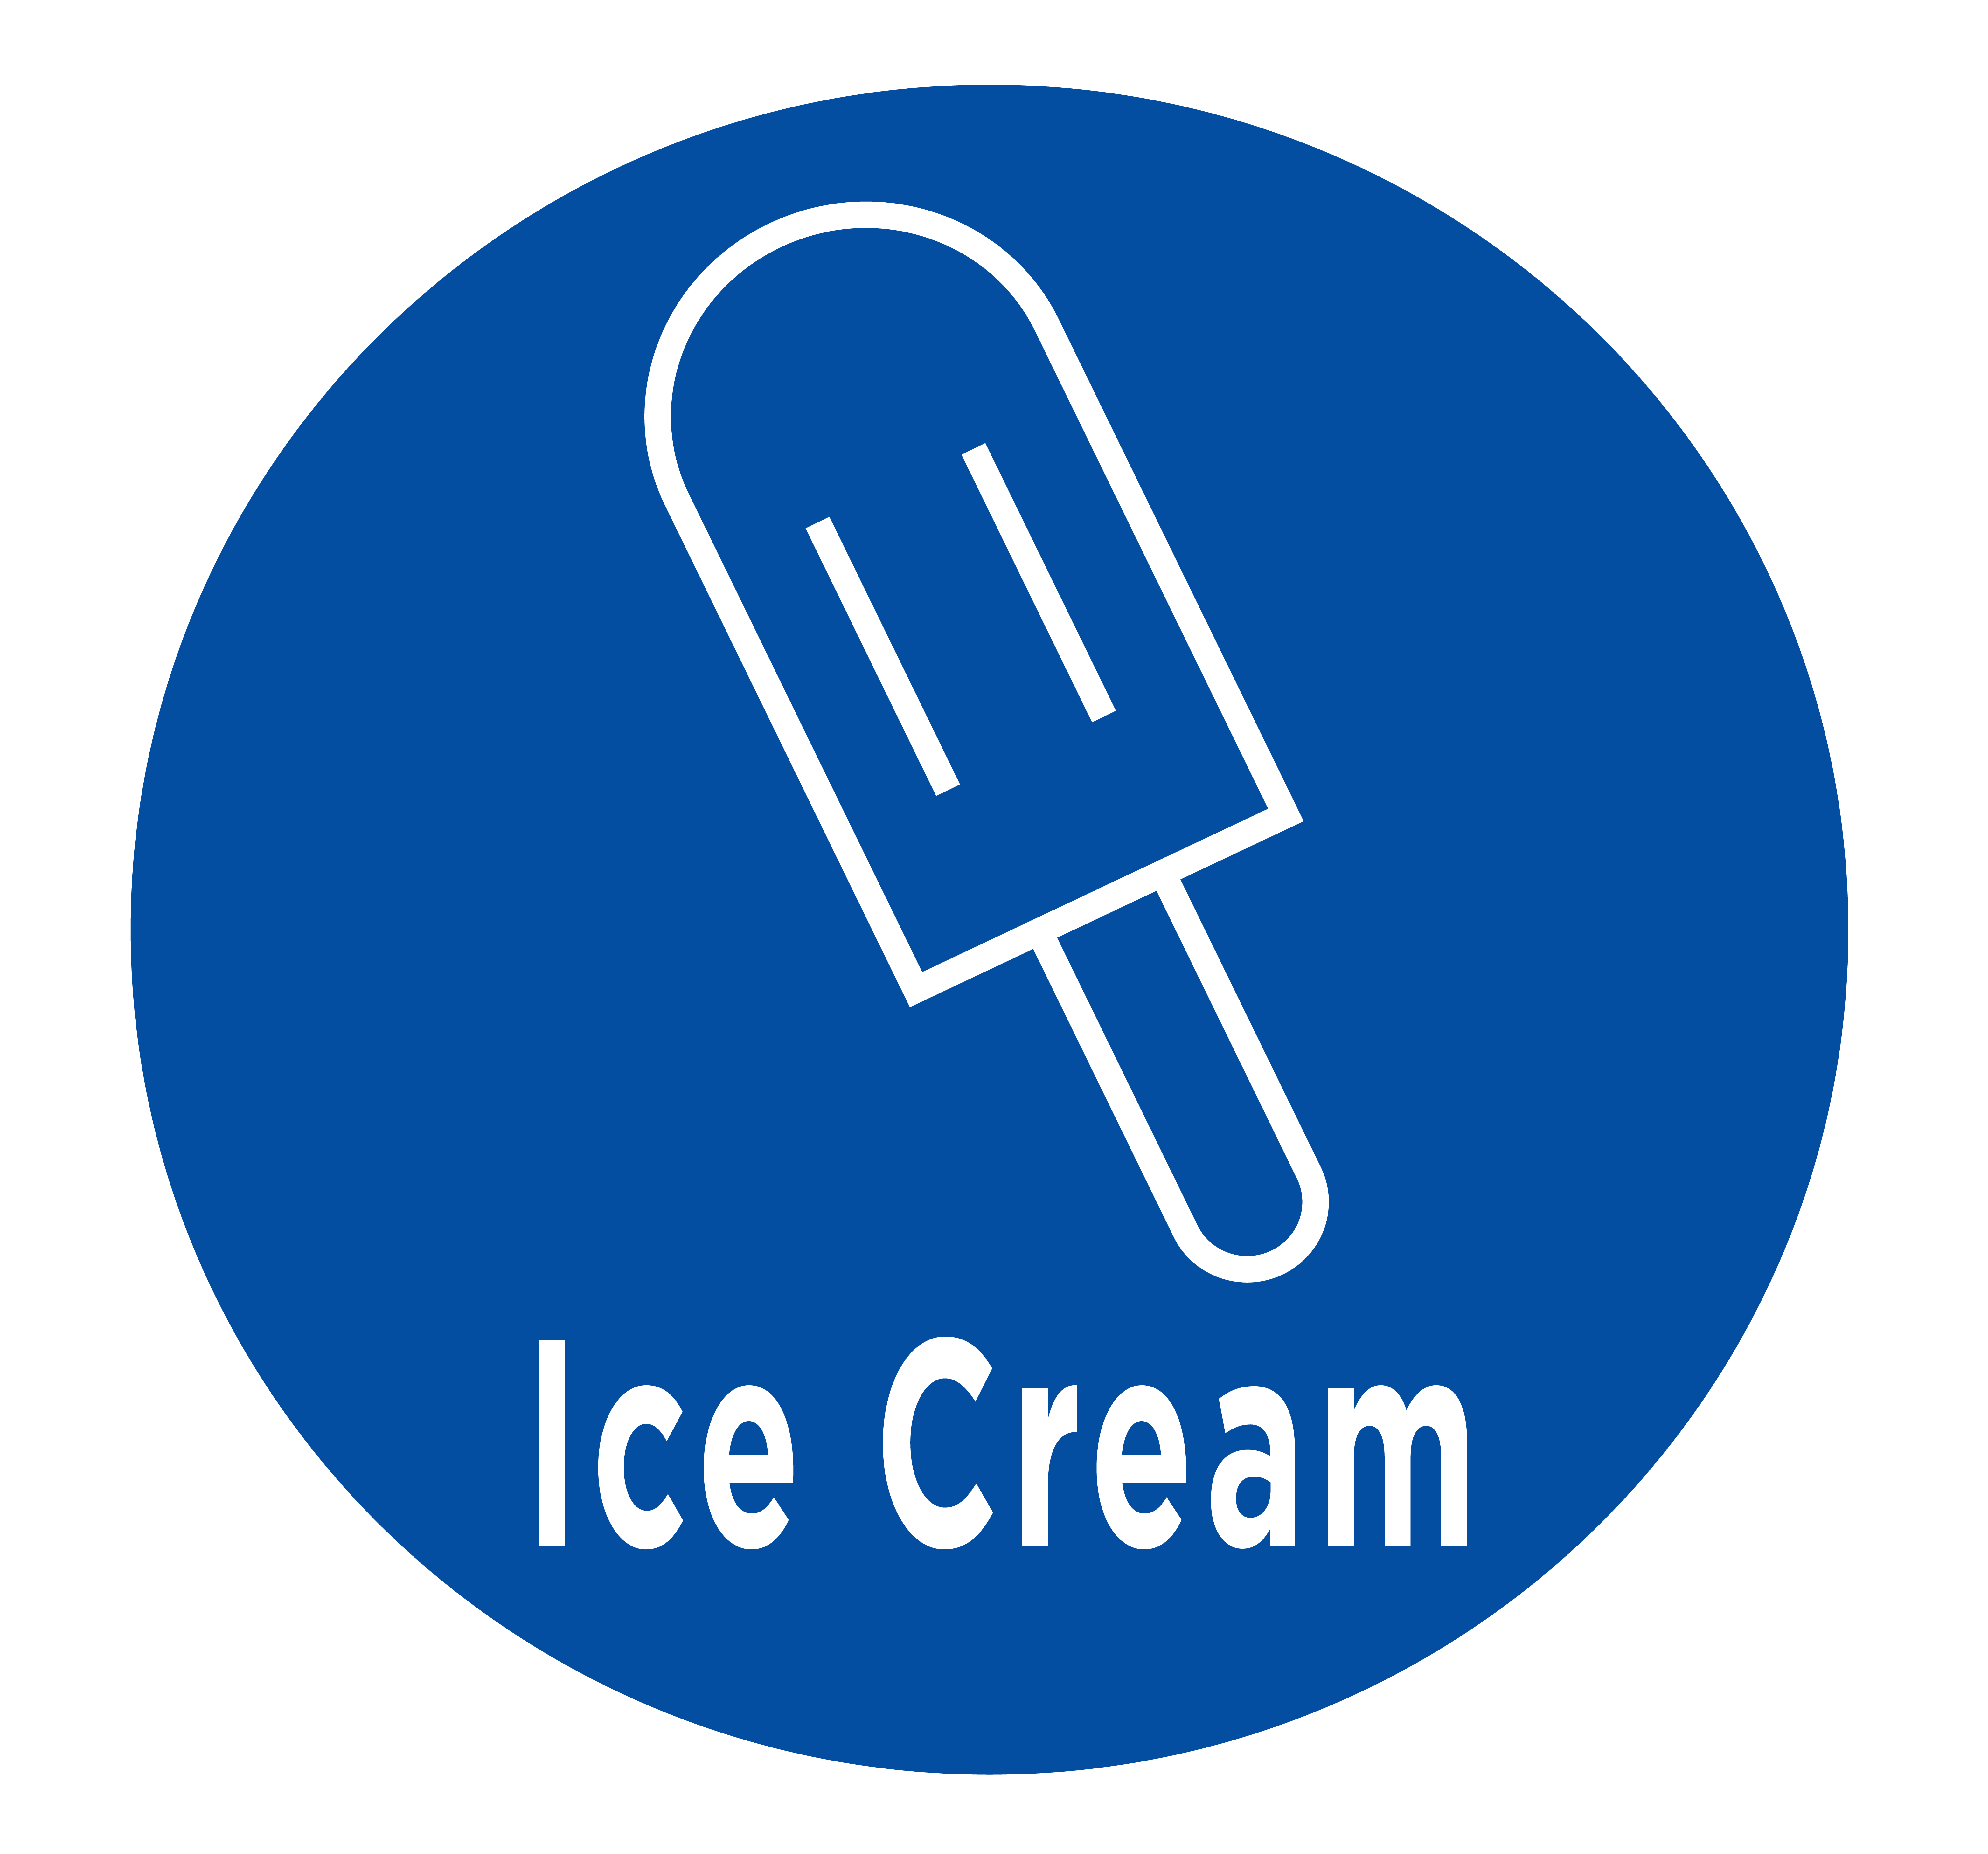 An ice-cream logo image